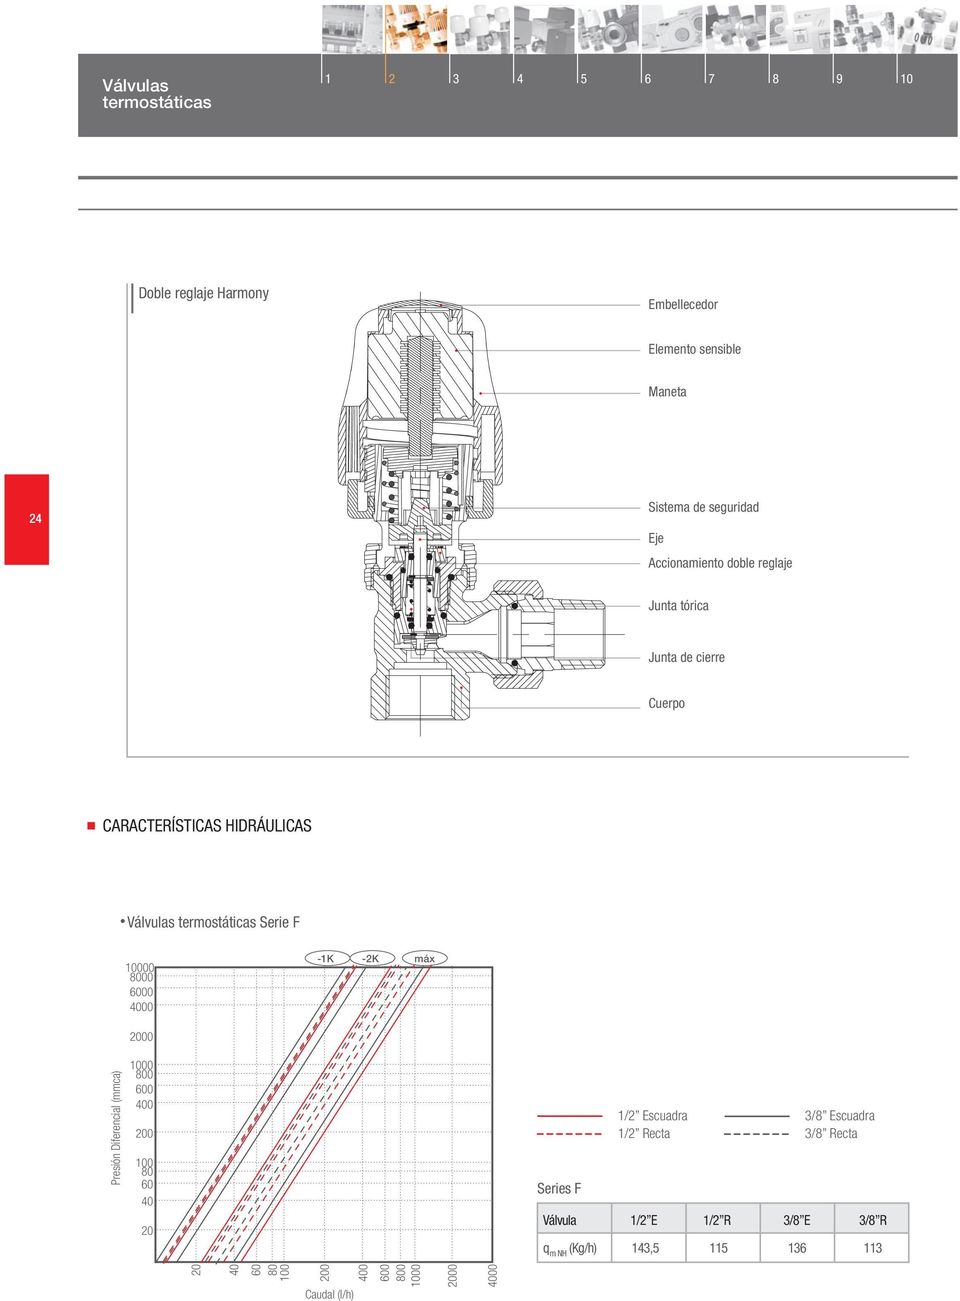 Válvulas termostáticas Serie F 0 0 0 00-1K -2K máx 00 Presión Diferencial (mmca) 0 0 Series F 1/2 Escuadra